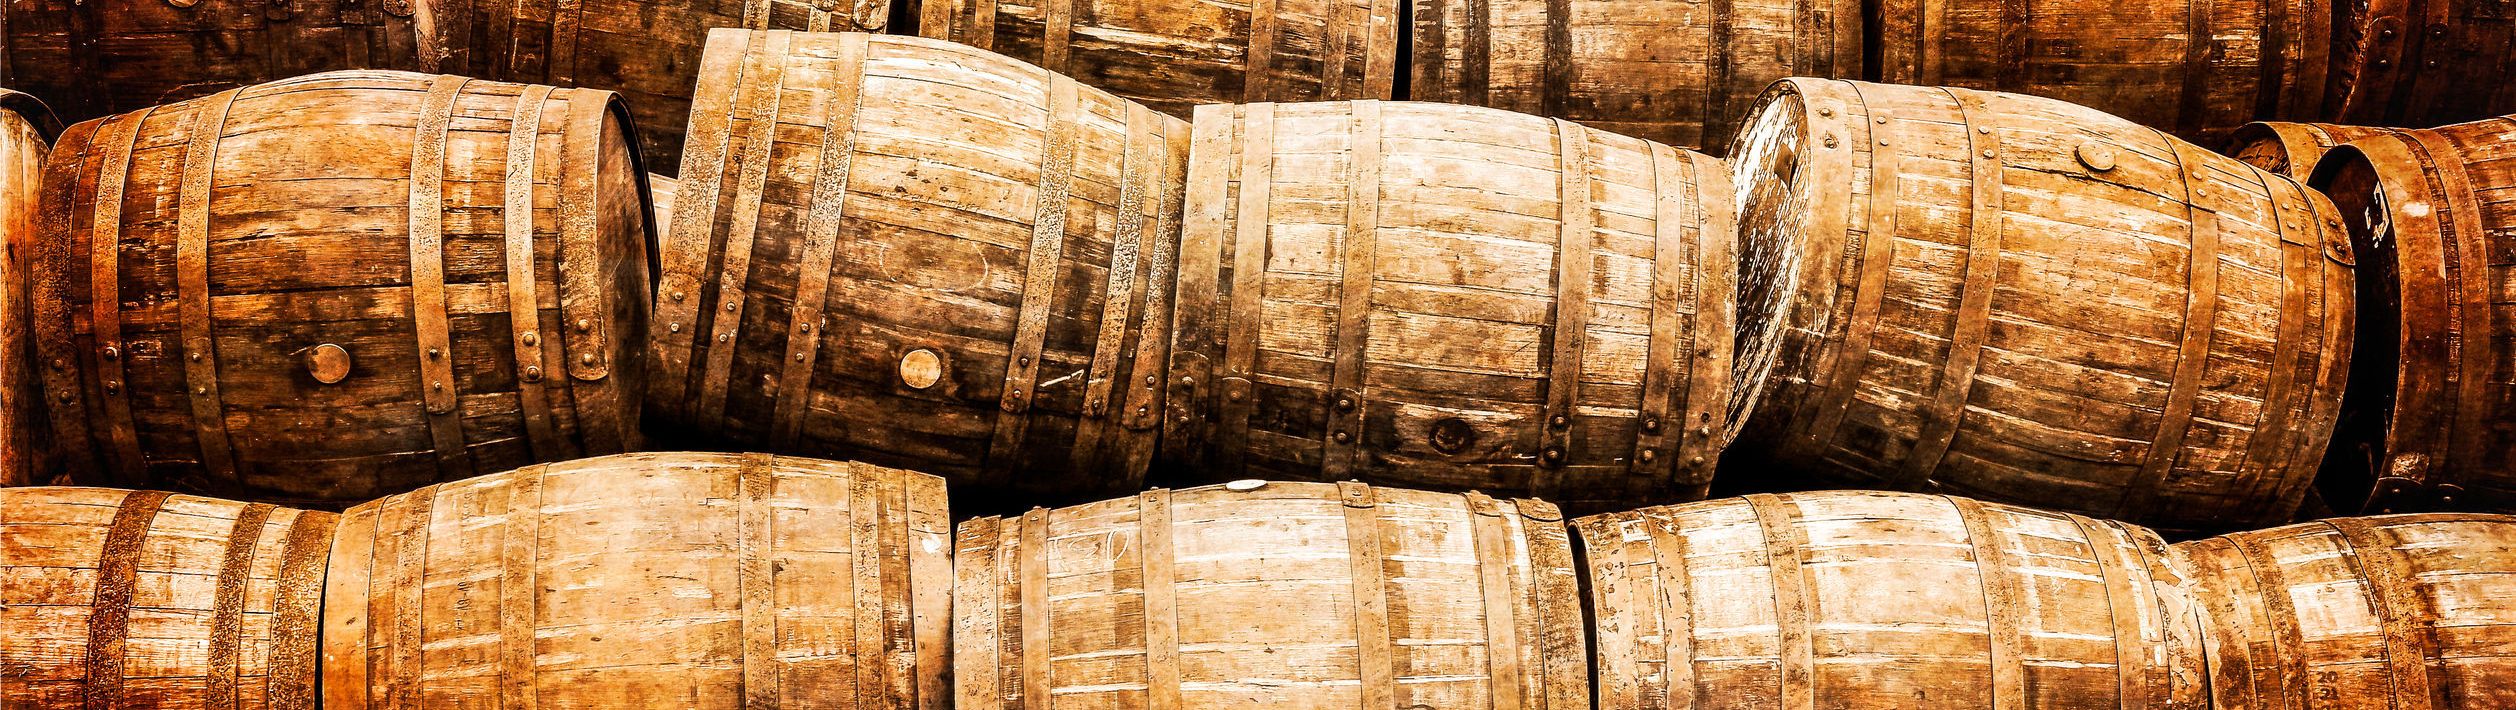 Barrels for aging spirits at distilleries